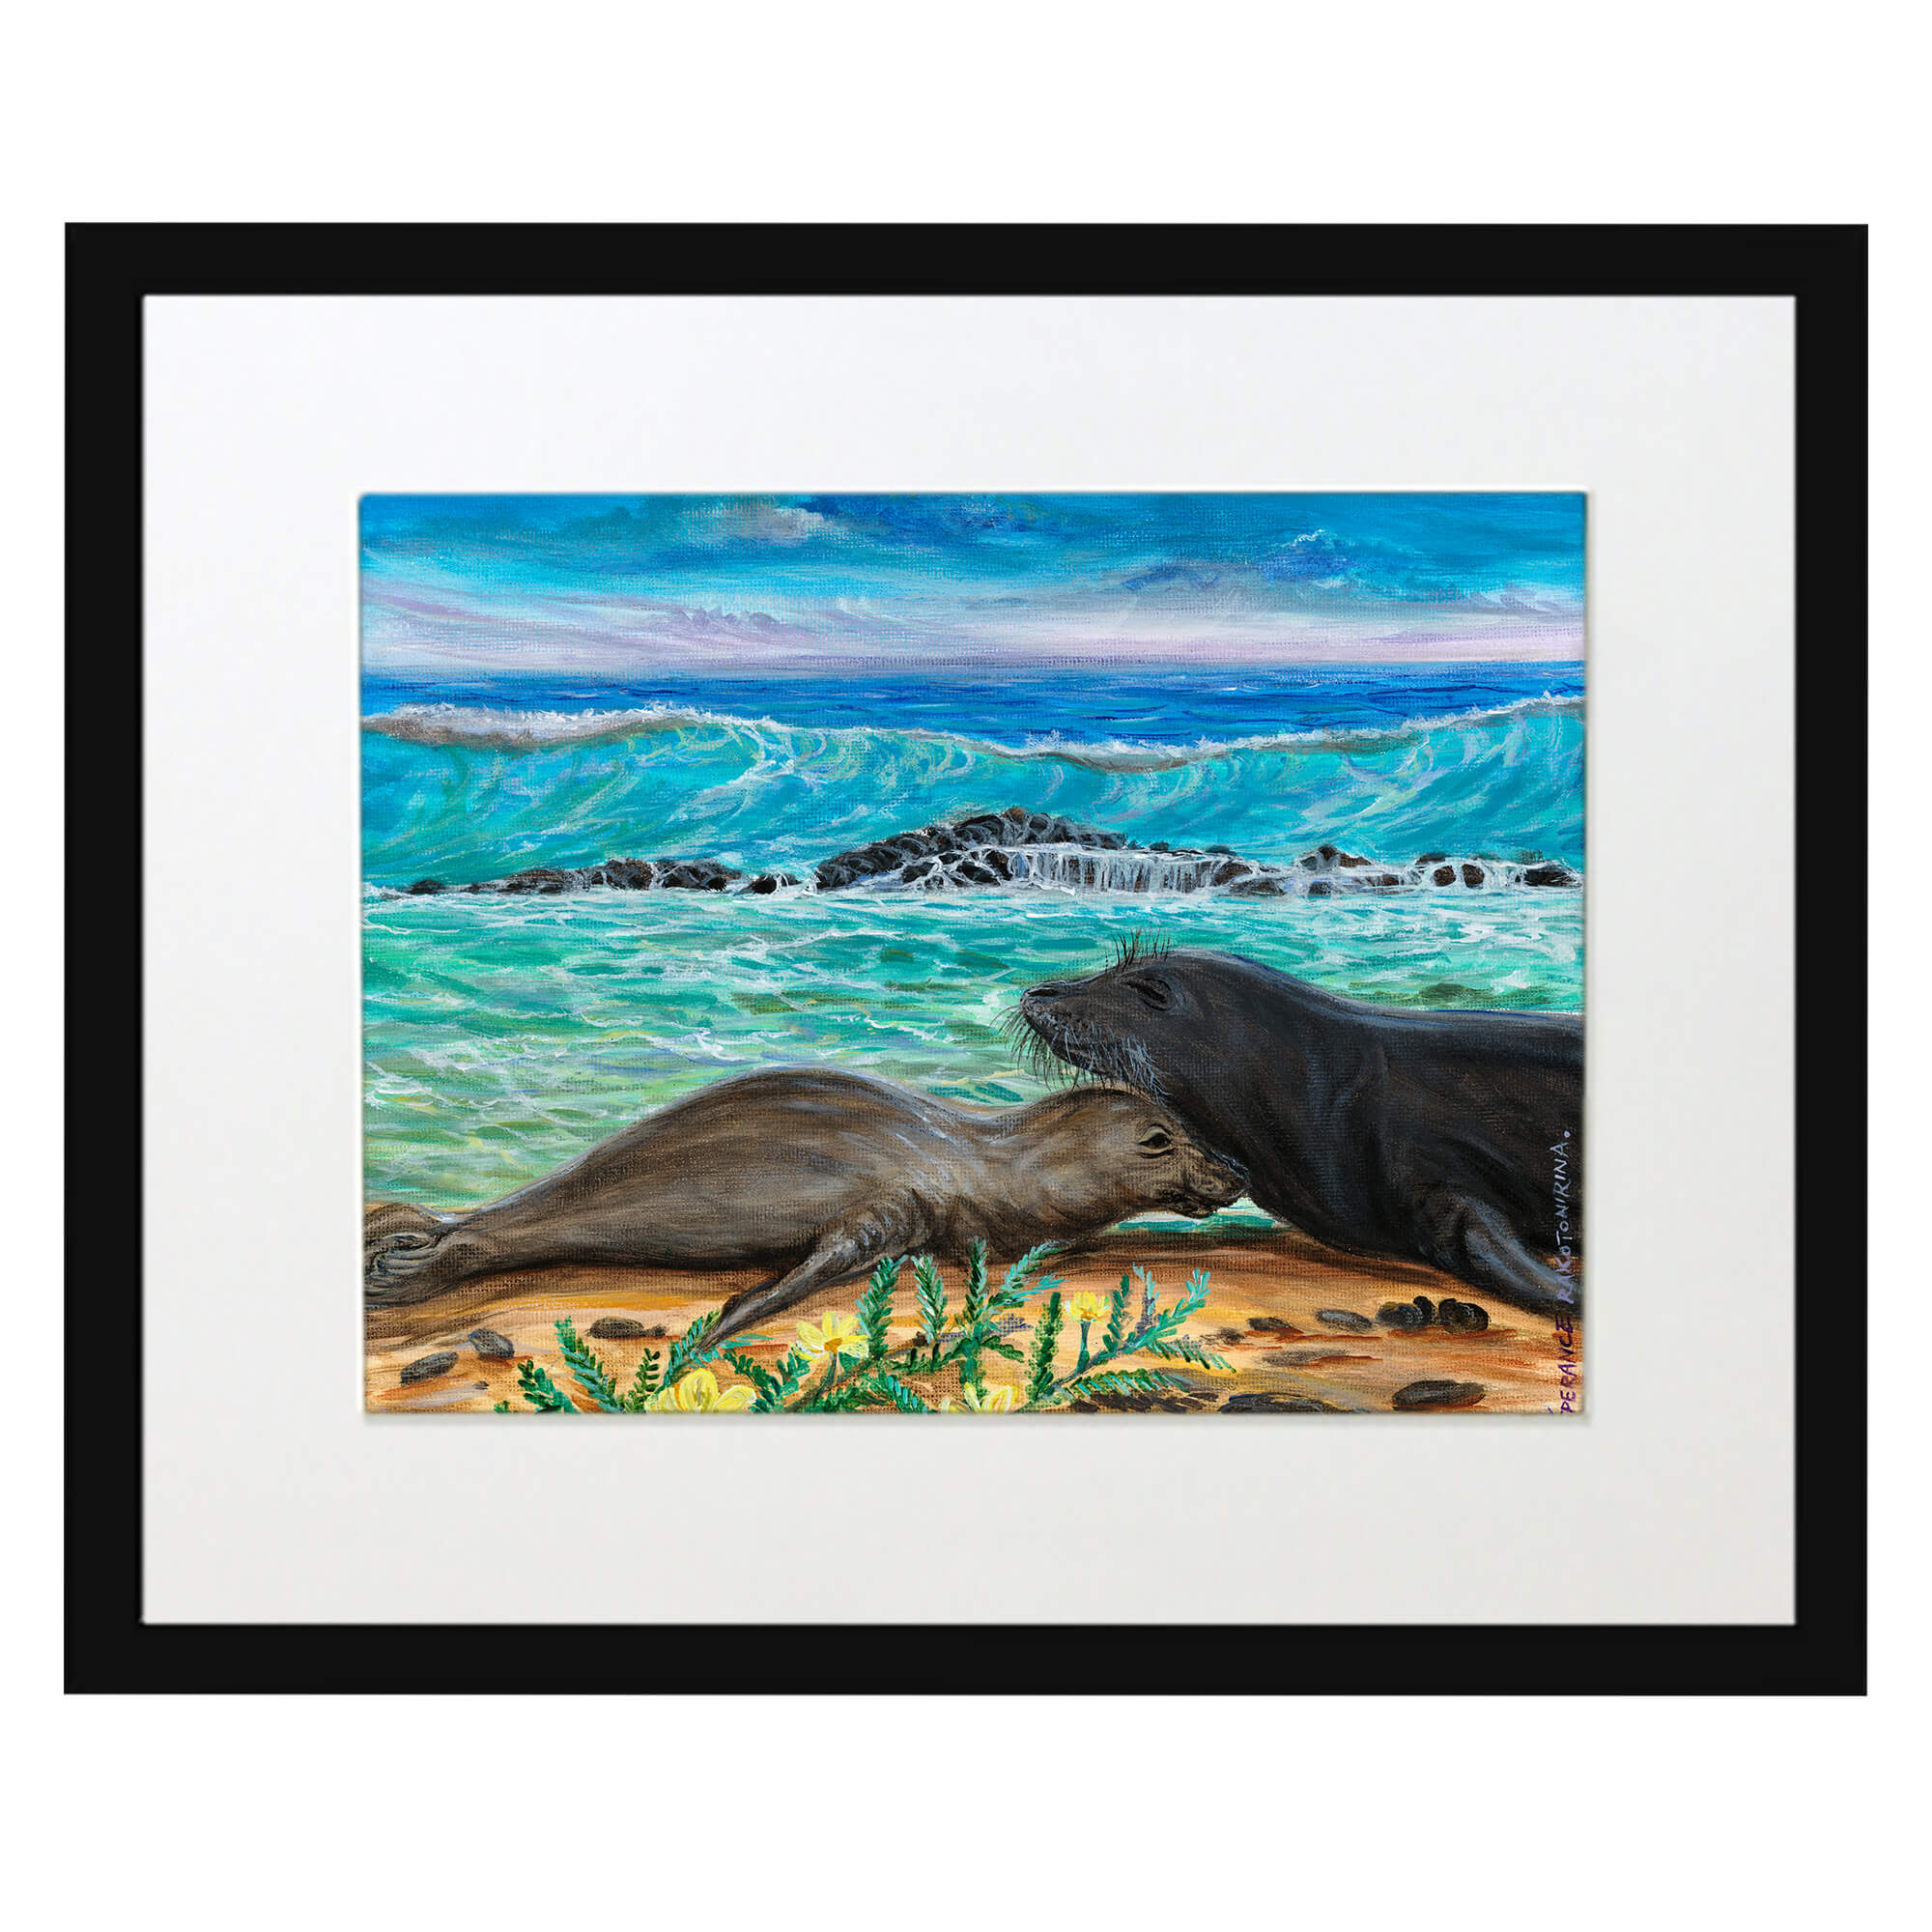 Matted art print with black frame showcasing the blue water by hawaii artist Esperance Rakotonirina